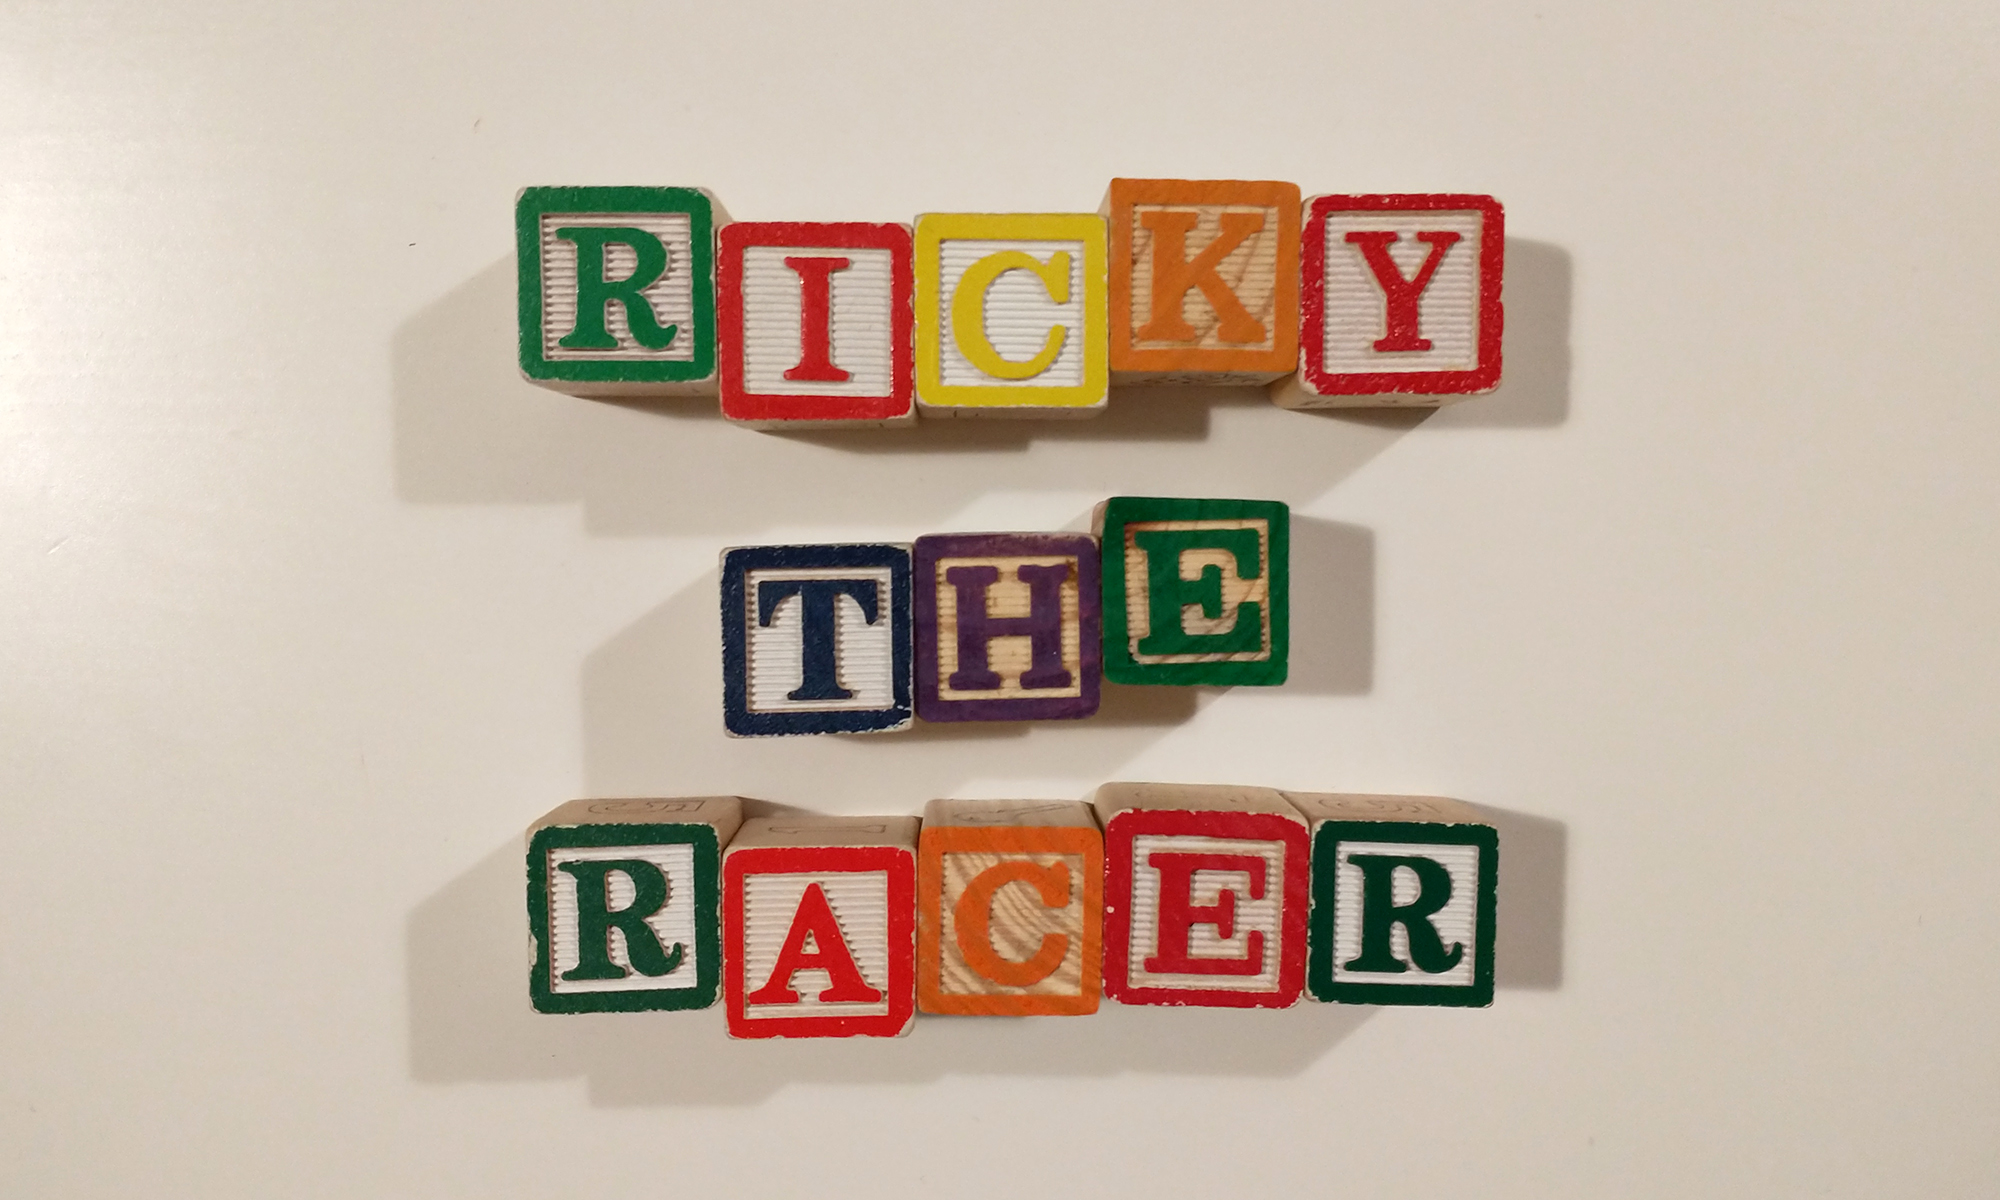 8 – Ricky the Racer